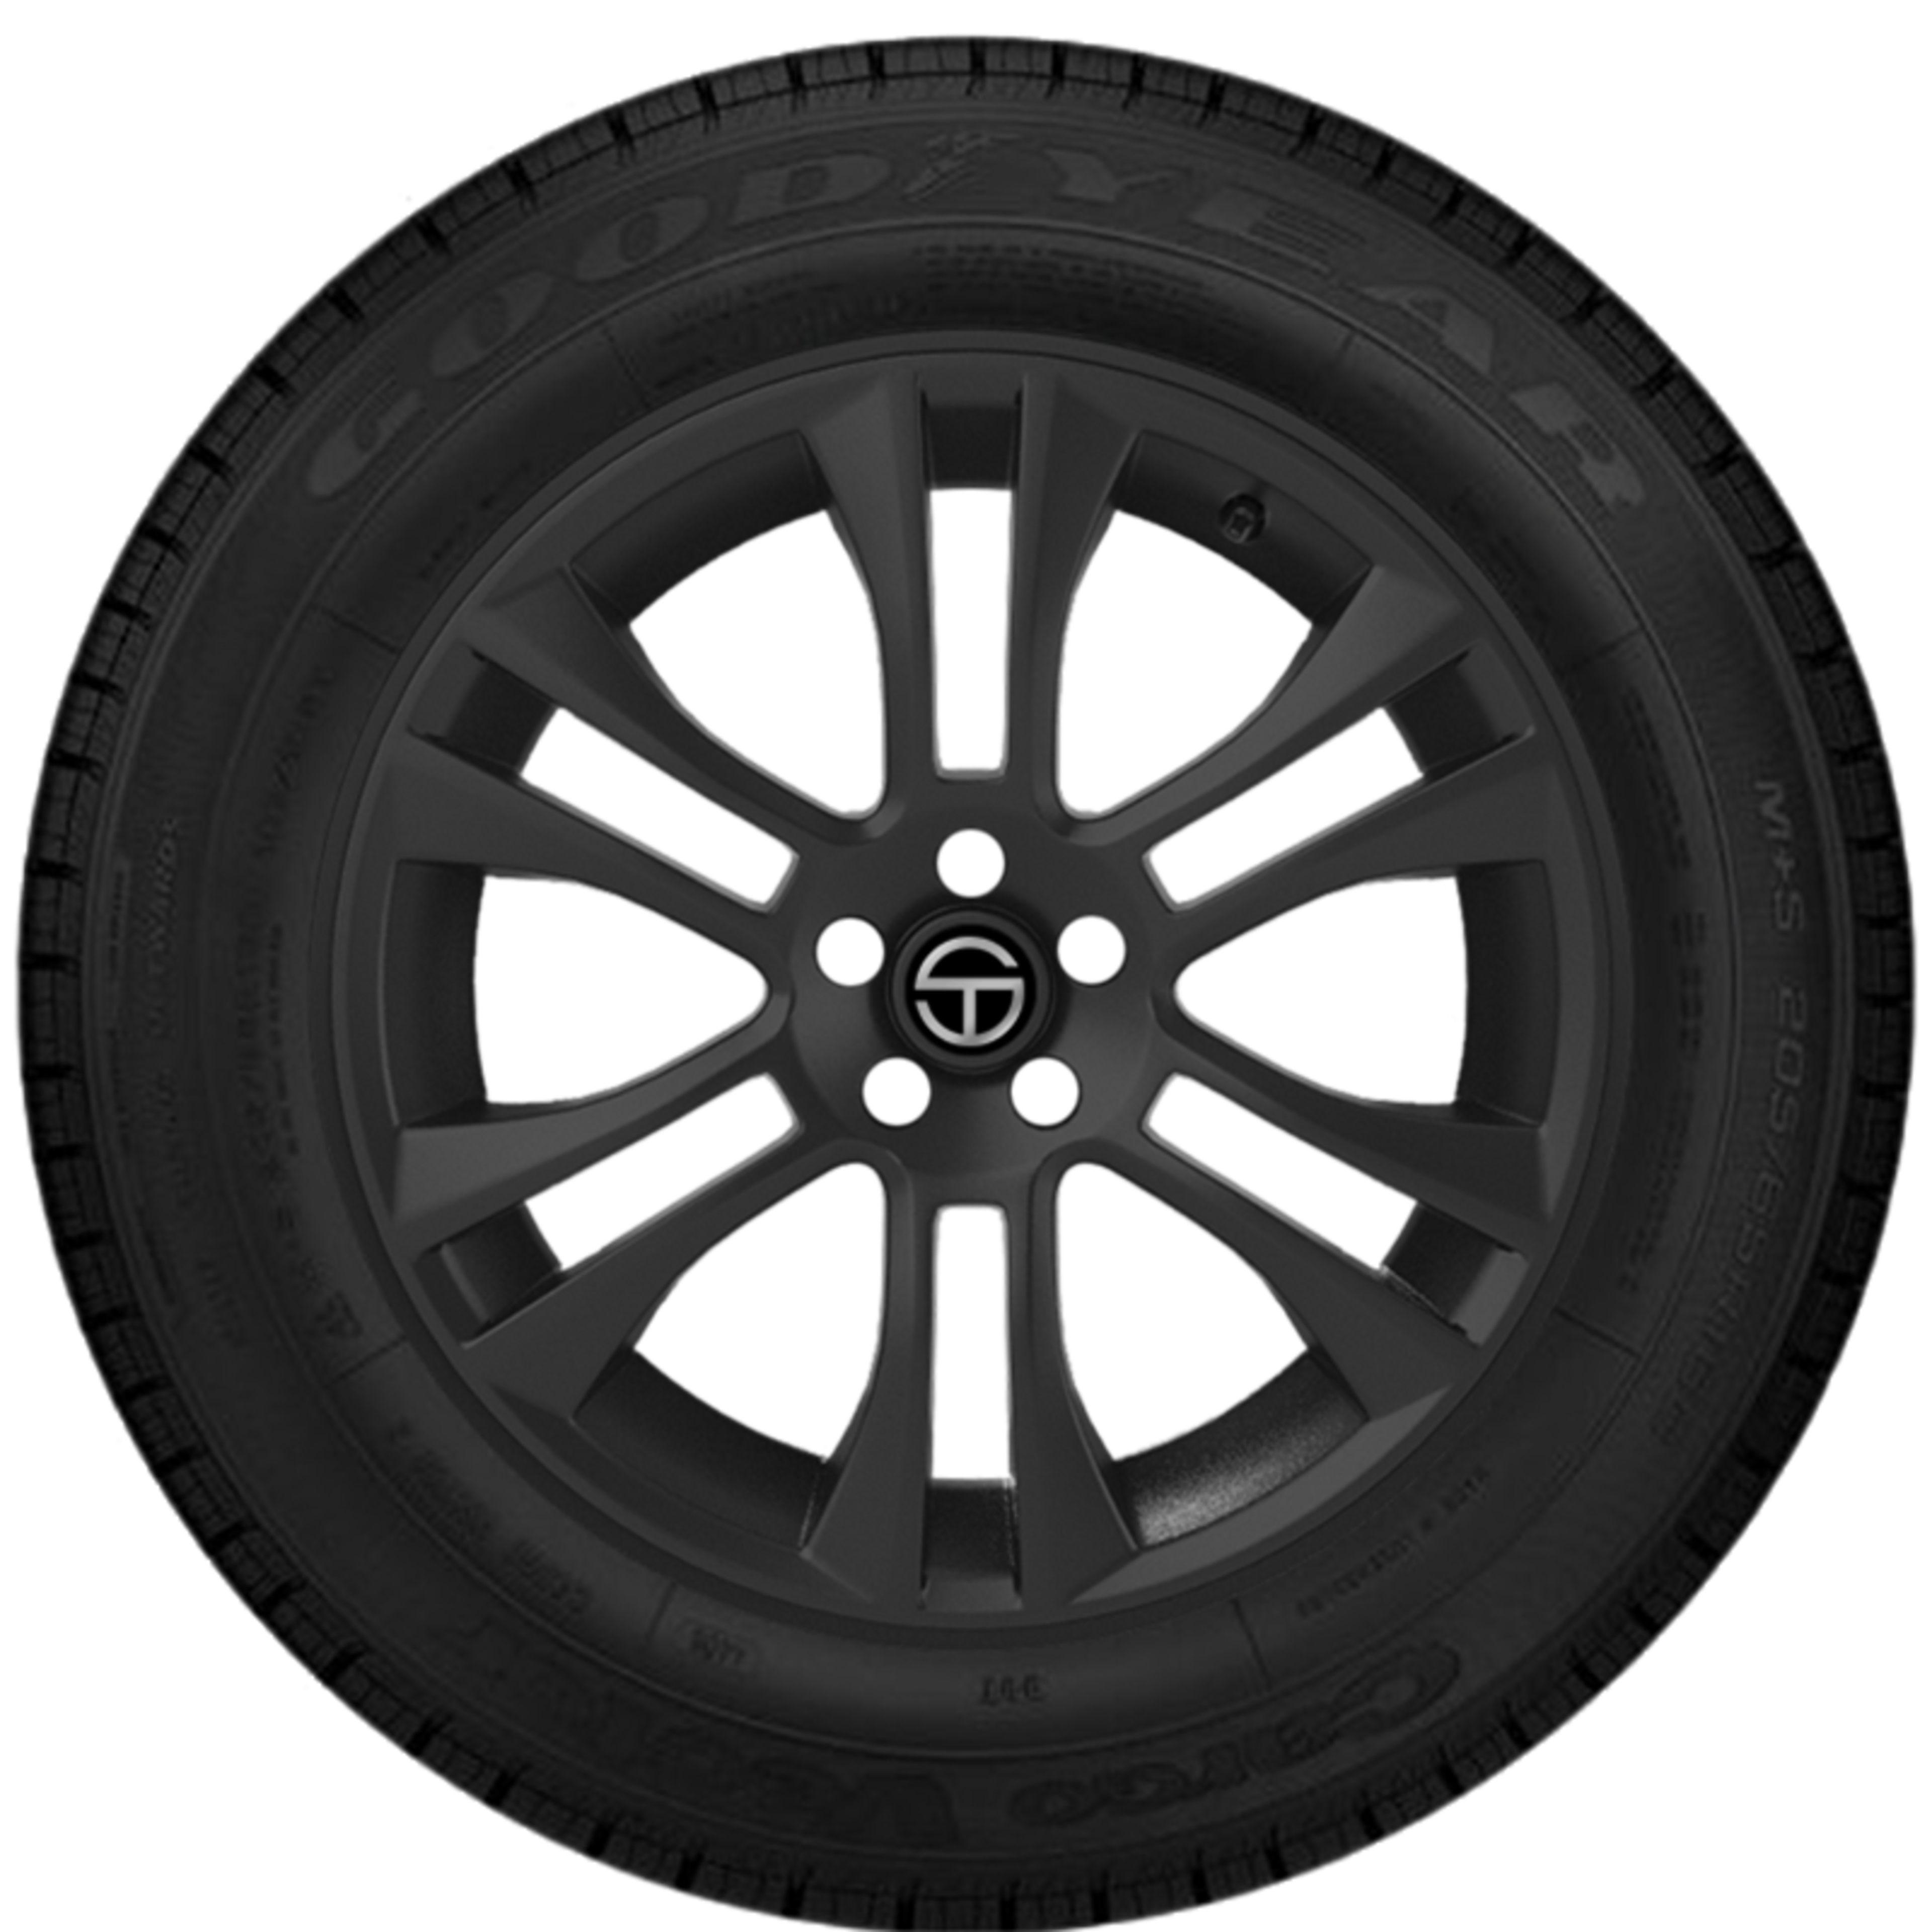 Buy Goodyear SimpleTire 2 Online Tires Vector Cargo 